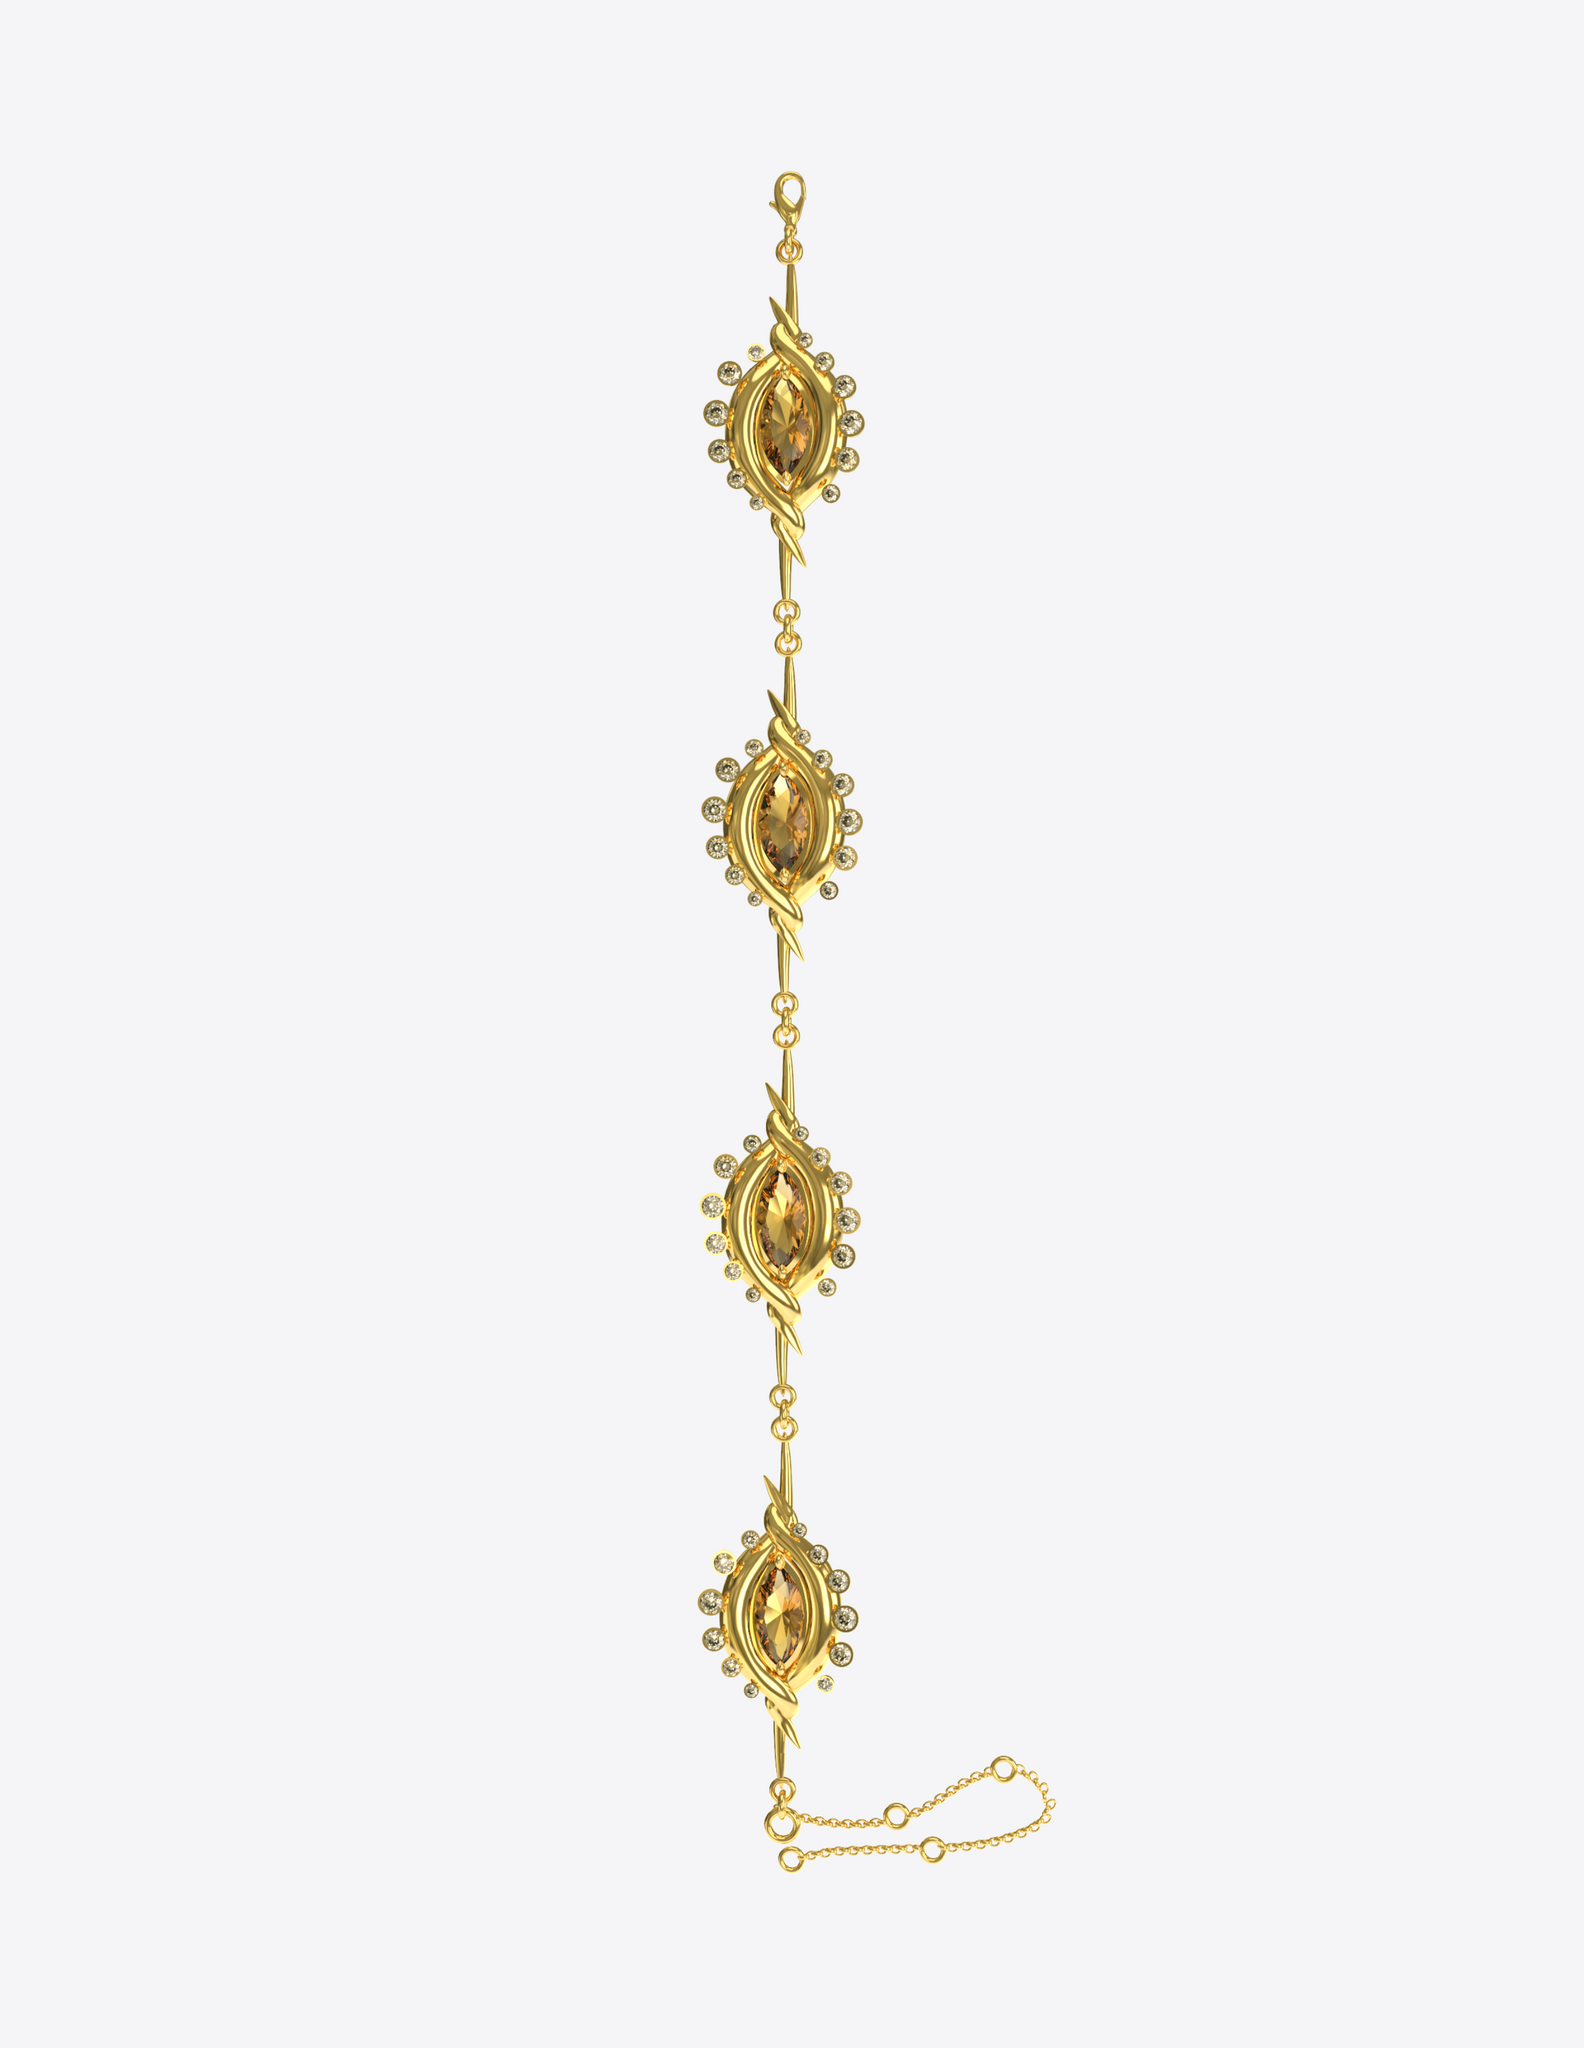 22K Gold Meenakari Bangle Set of 2 (39.80G) - Queen of Hearts Jewelry